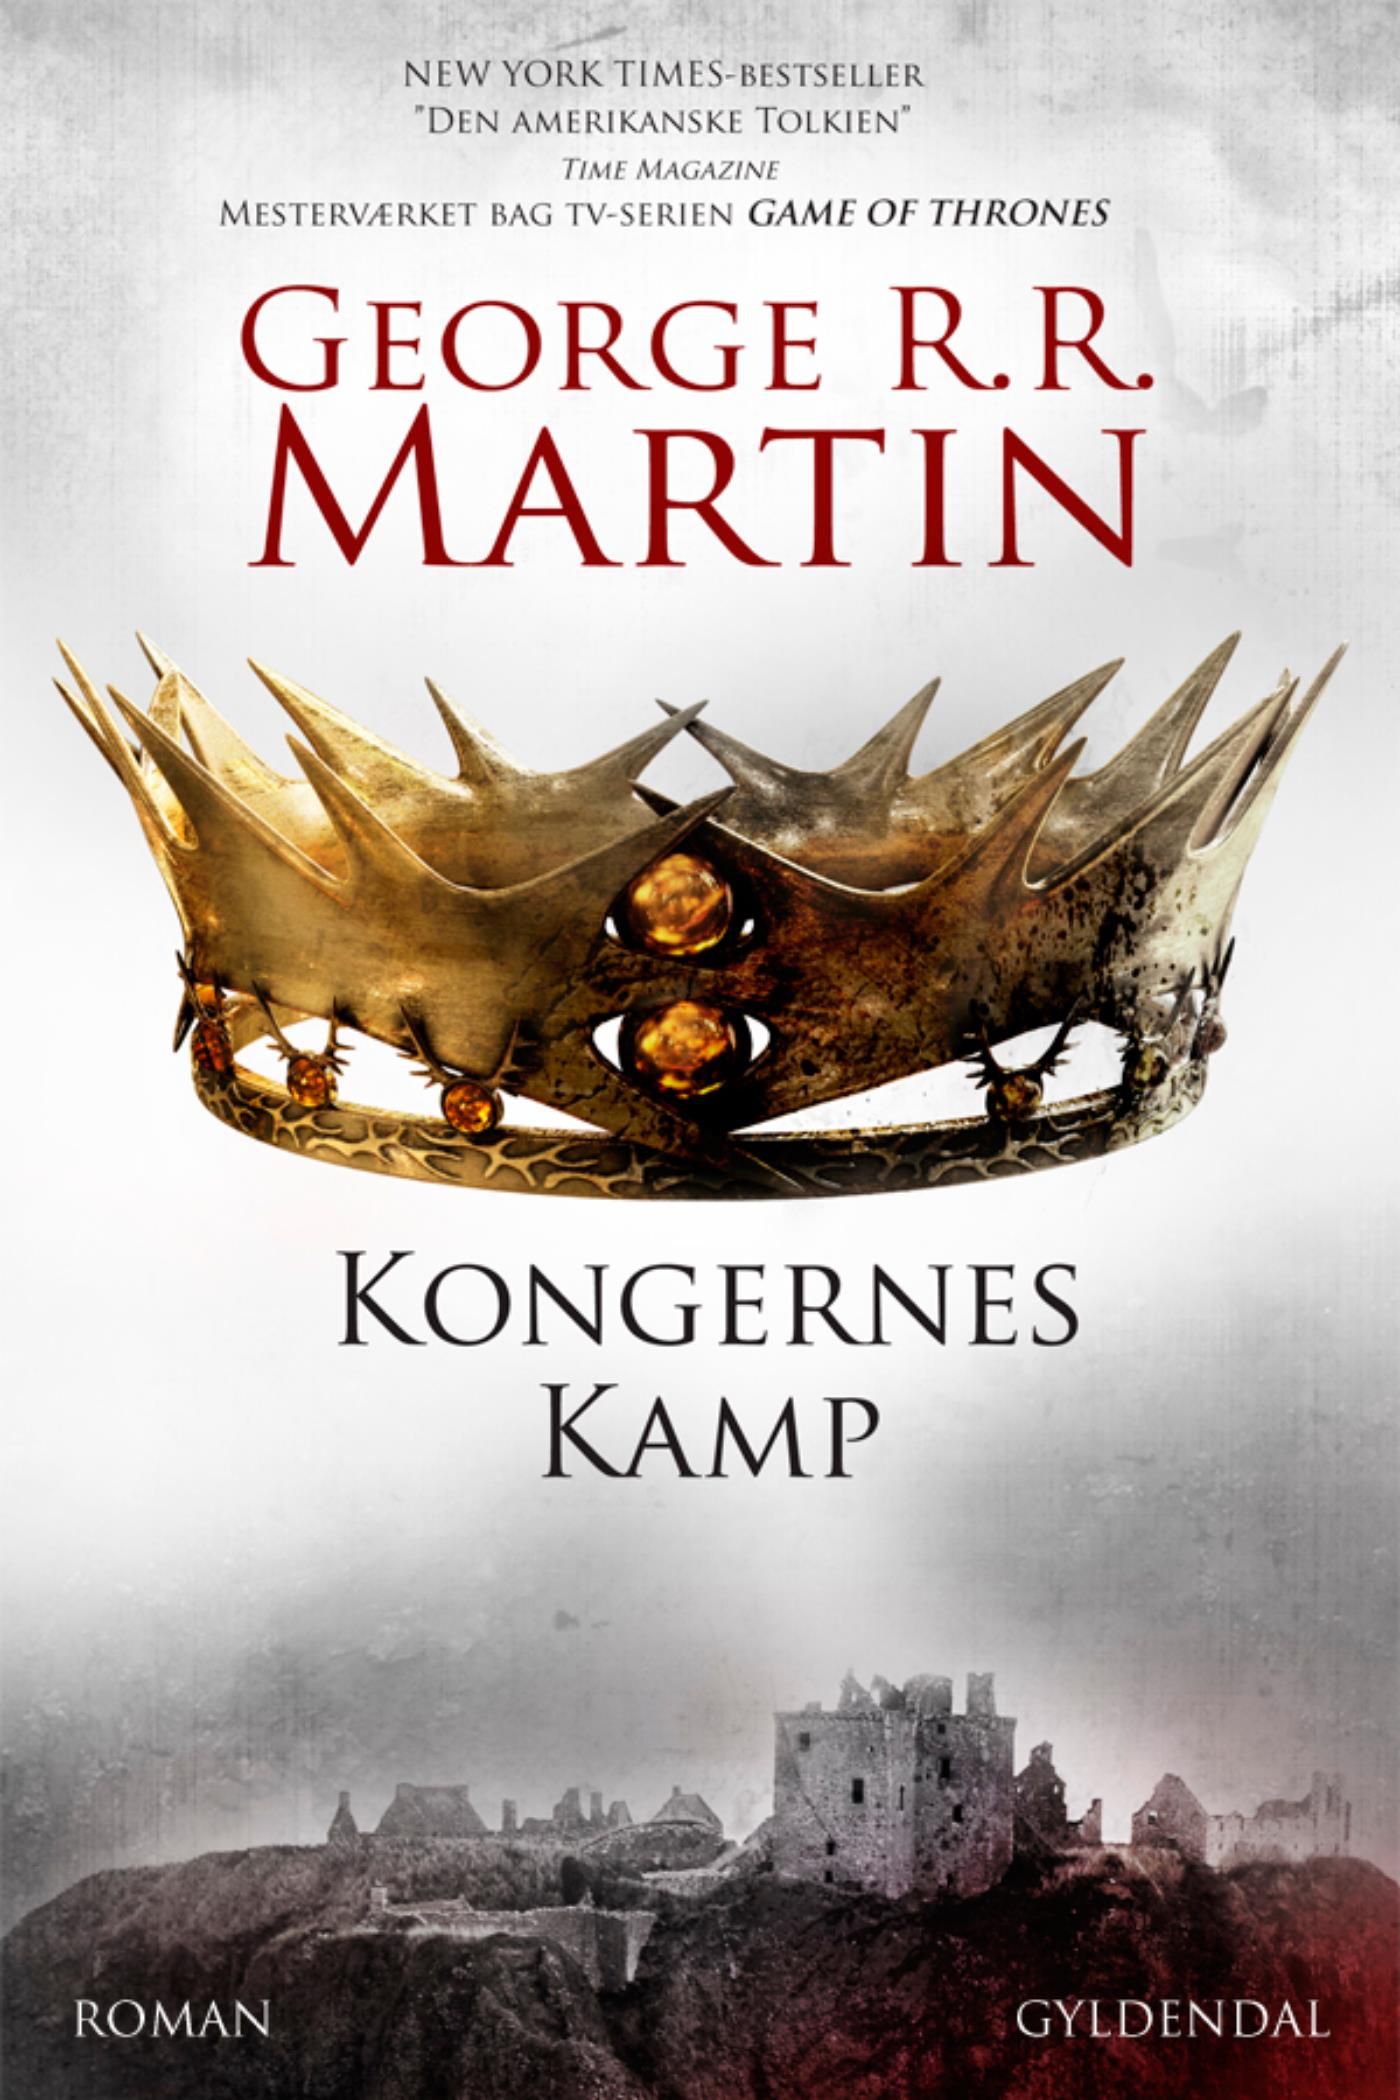 Kongernes kamp, eBook by George R. R. Martin